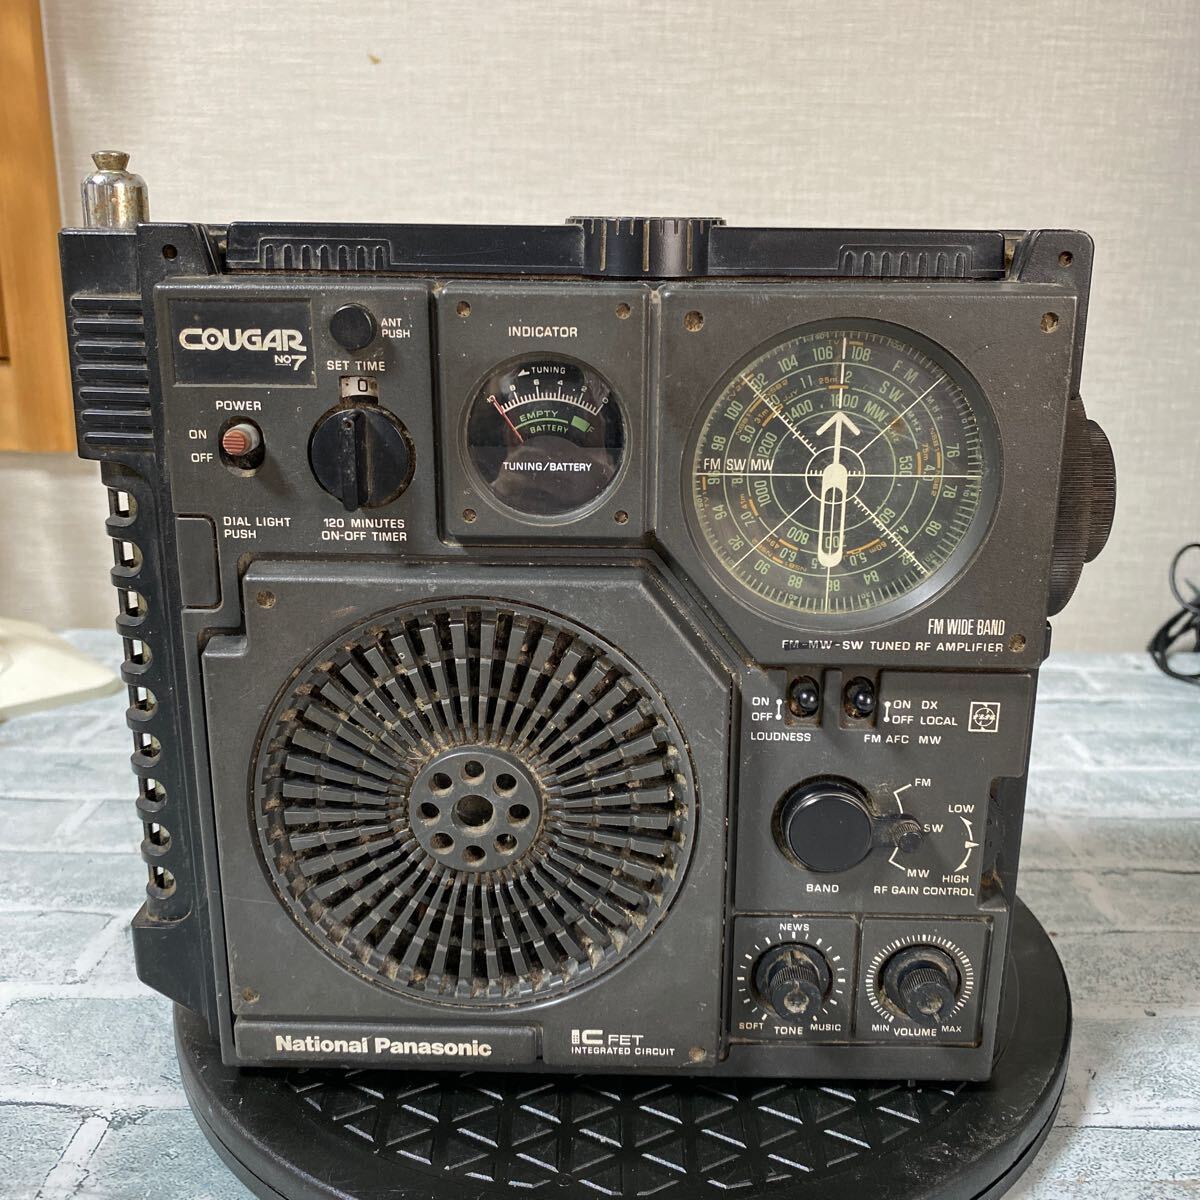 （38）National Panasonic Cougar クーガー ラジオ アンティーク RF-877 現状品の画像1